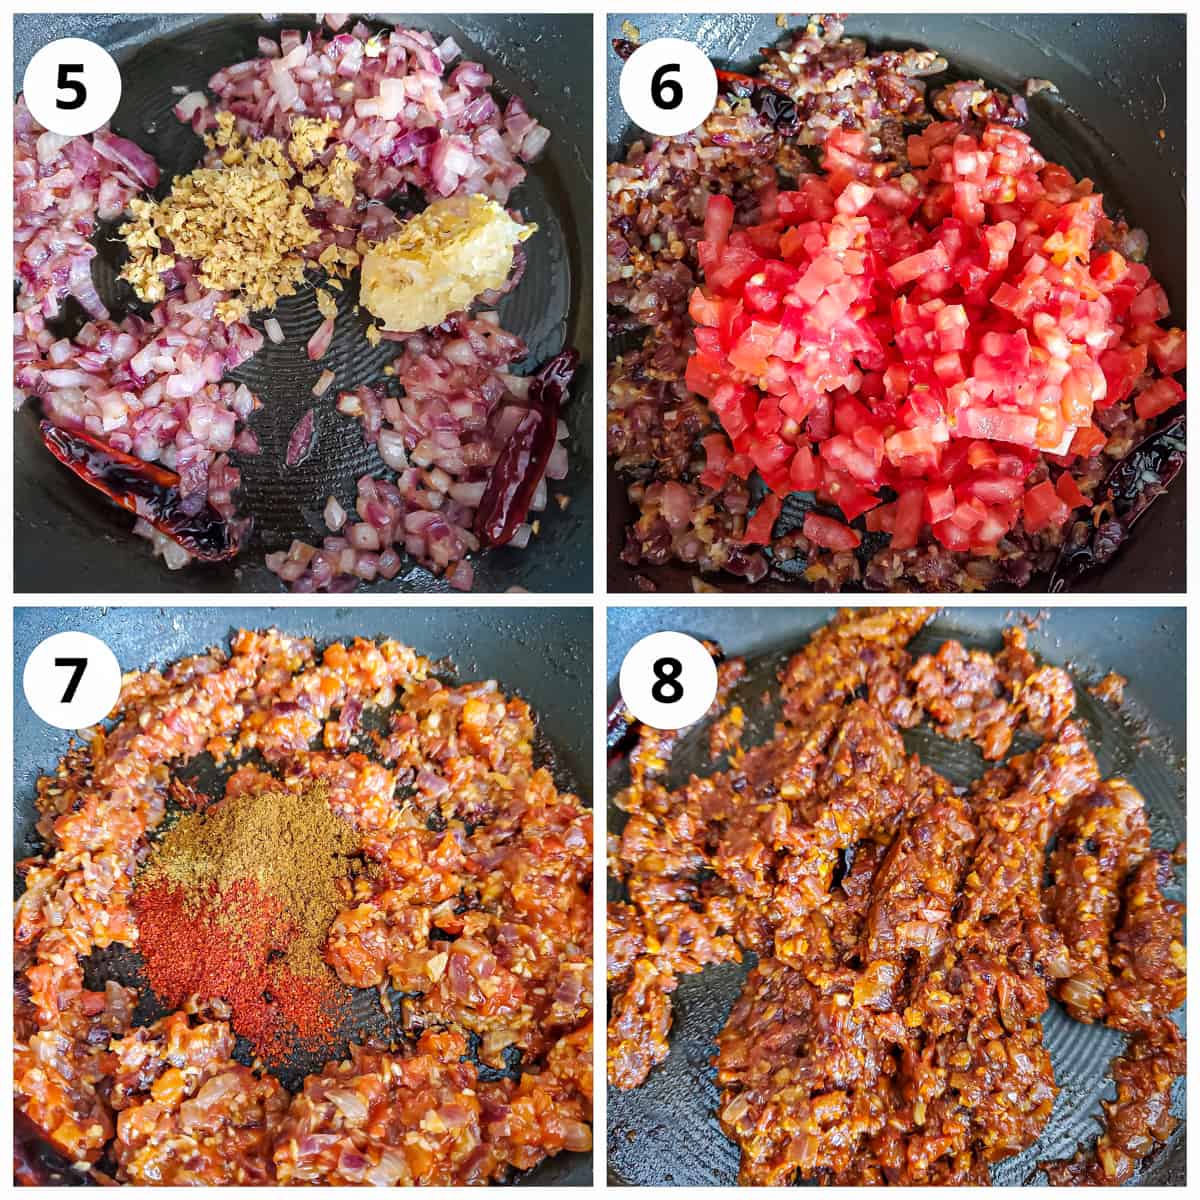 Steps for making tadka (tempering) for sarson ka Saag